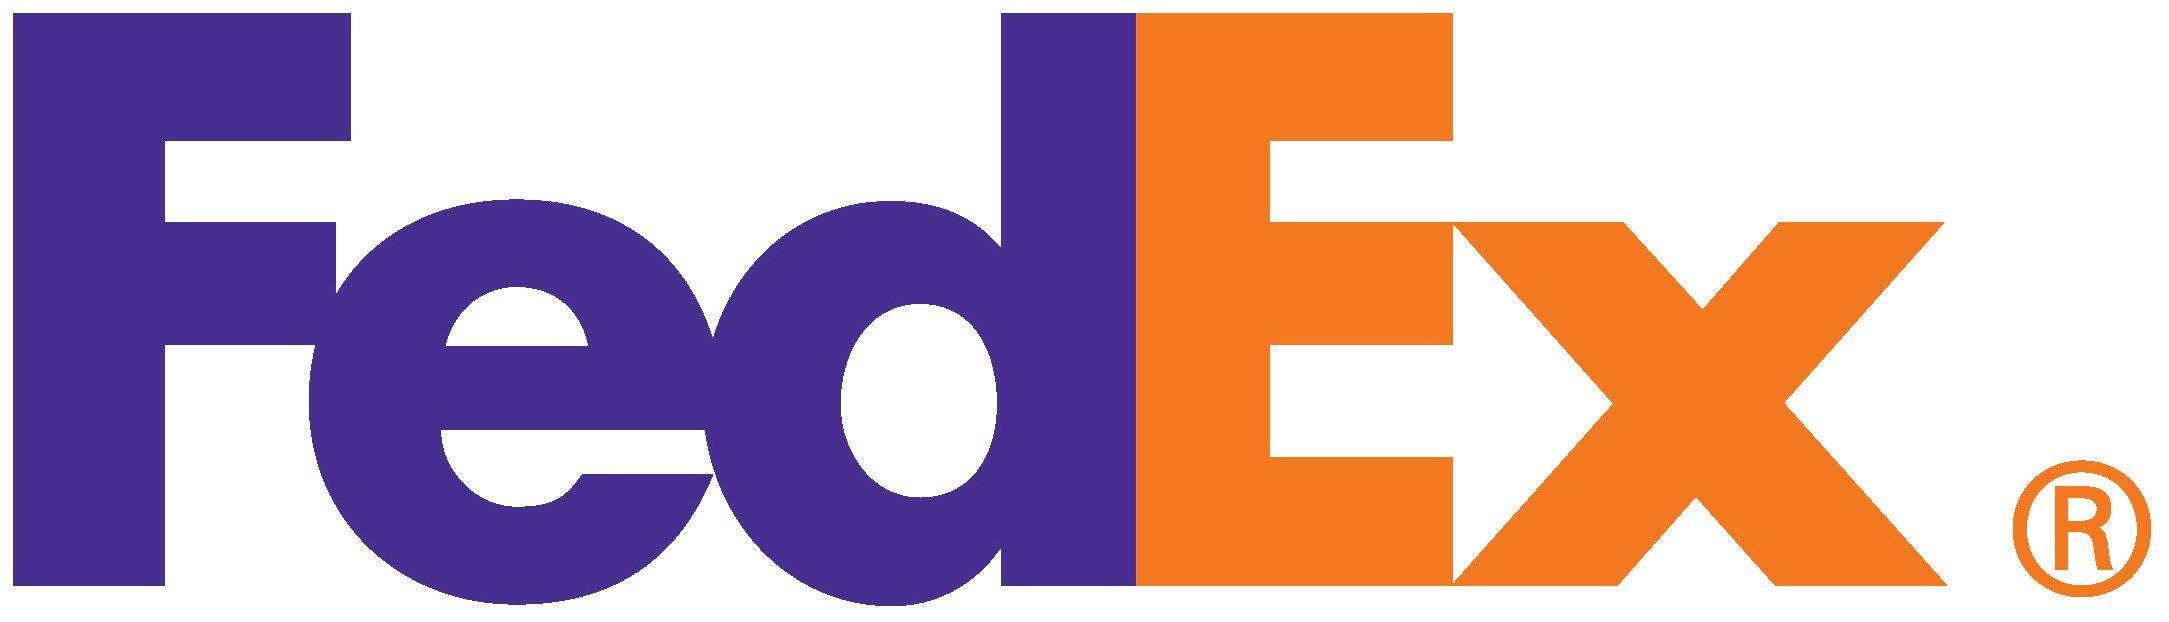 FedEx Corporate Logo - fedex logo | ololoshenka | Oil painting on canvas, Painting, Logos